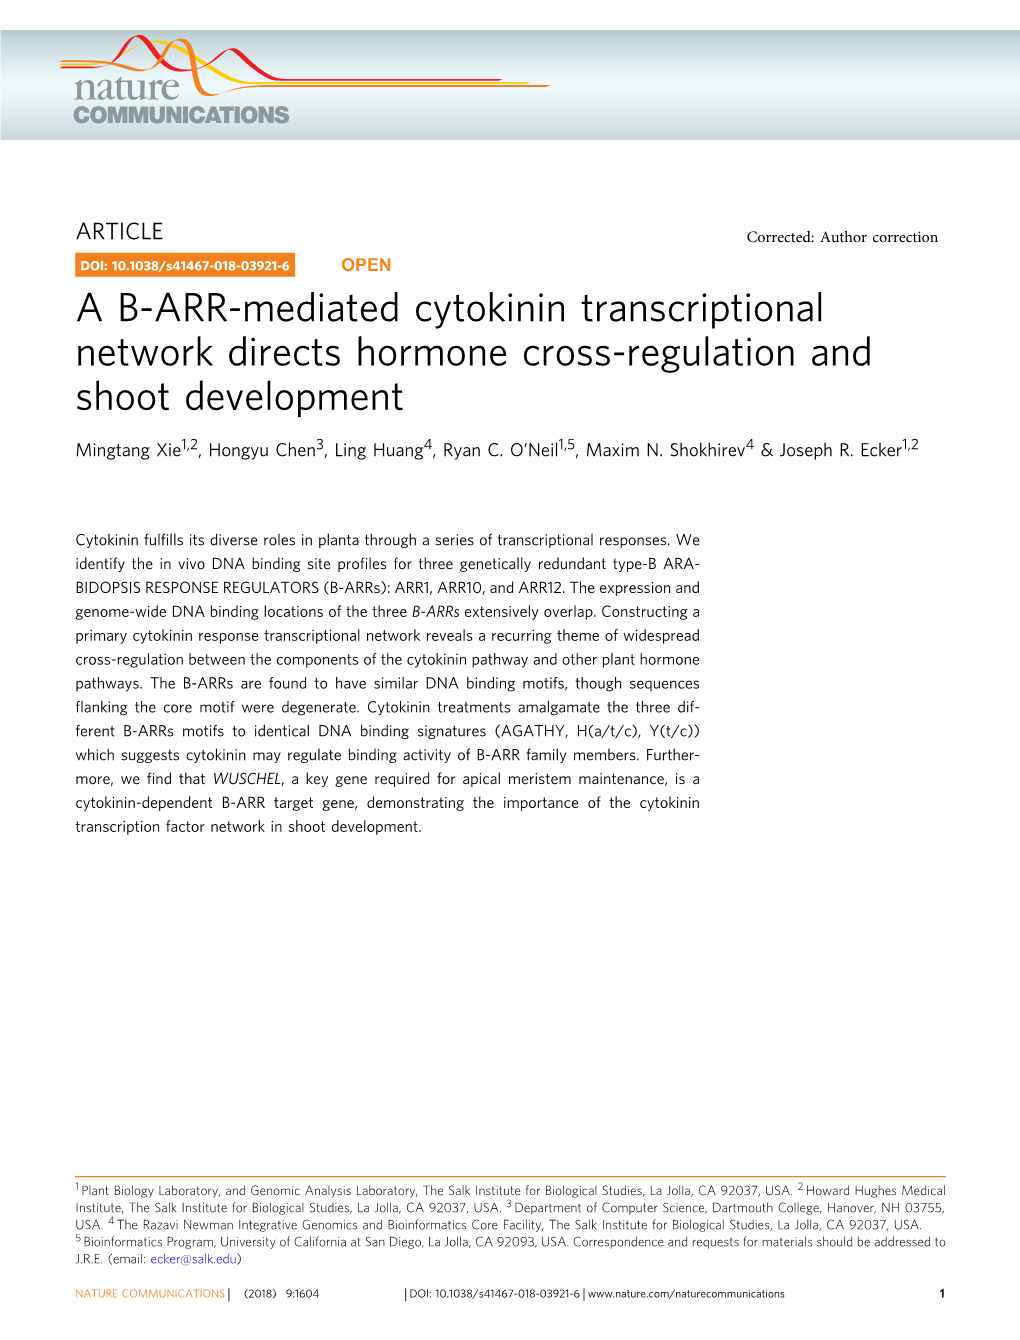 A B-ARR-Mediated Cytokinin Transcriptional Network Directs Hormone Cross-Regulation and Shoot Development